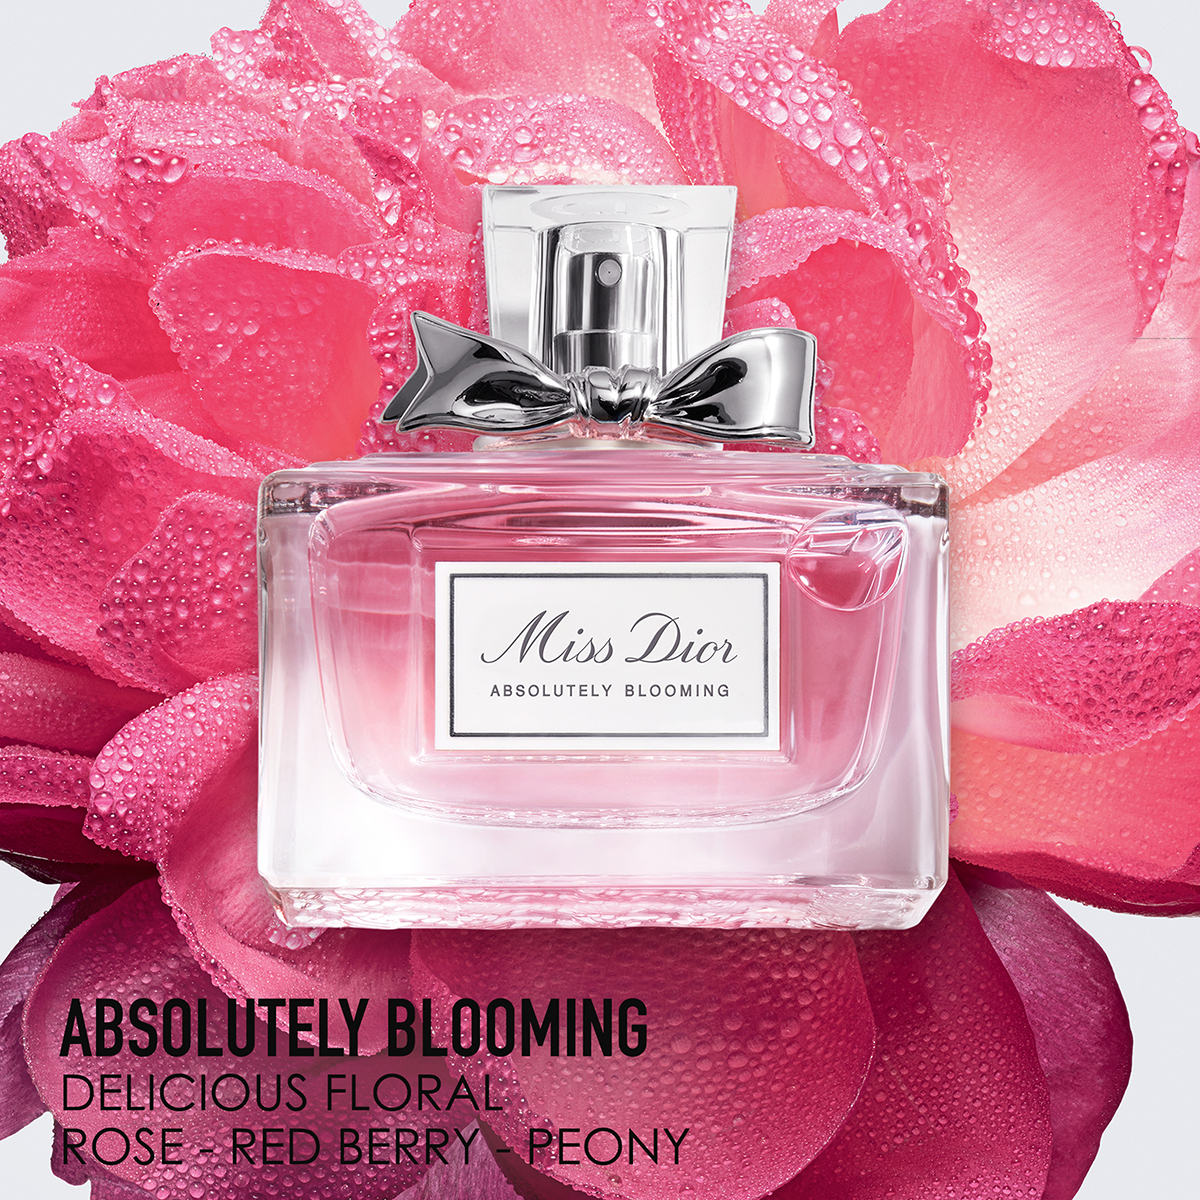 Dior Miss Dior Absolutely Blooming Eau De Parfum